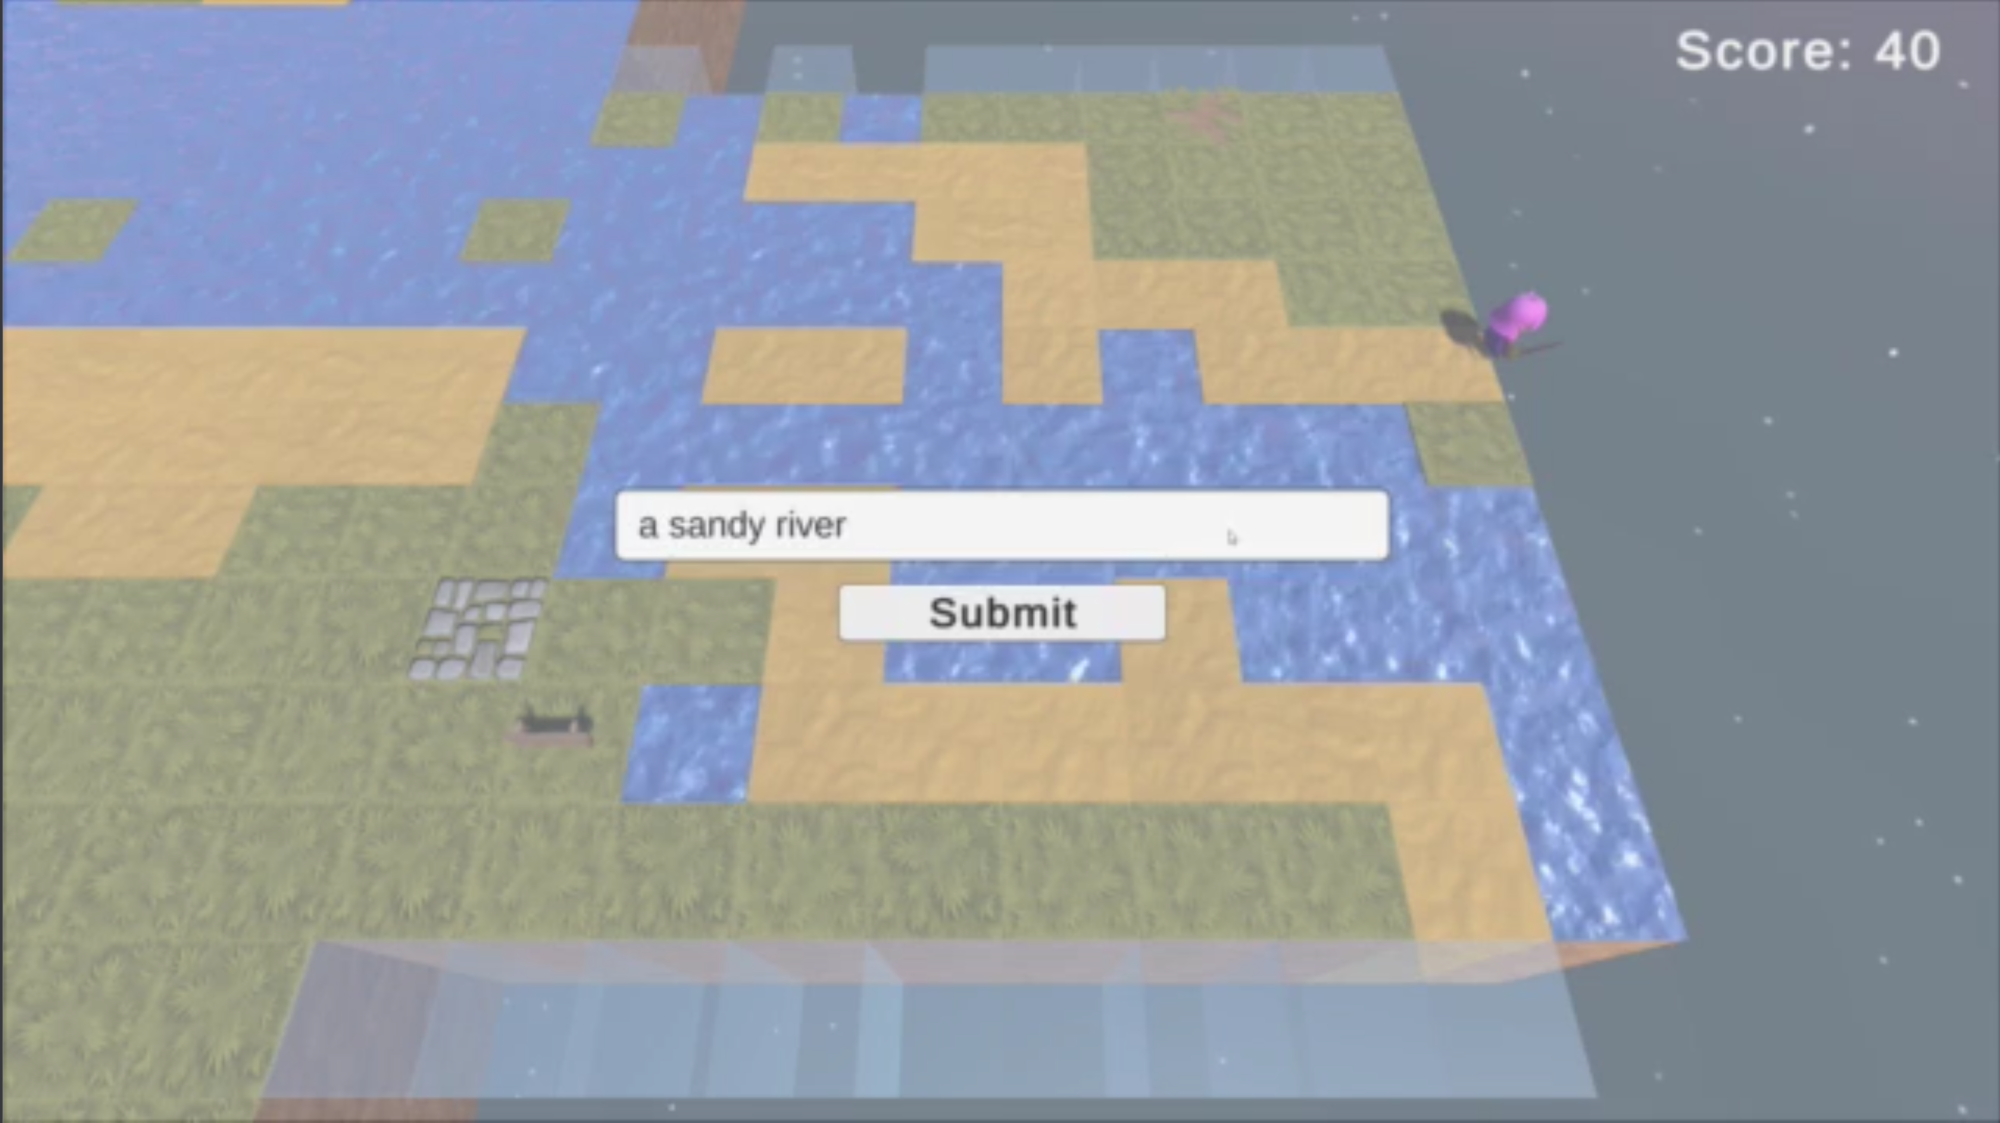 KI-Tool turns text into a video game